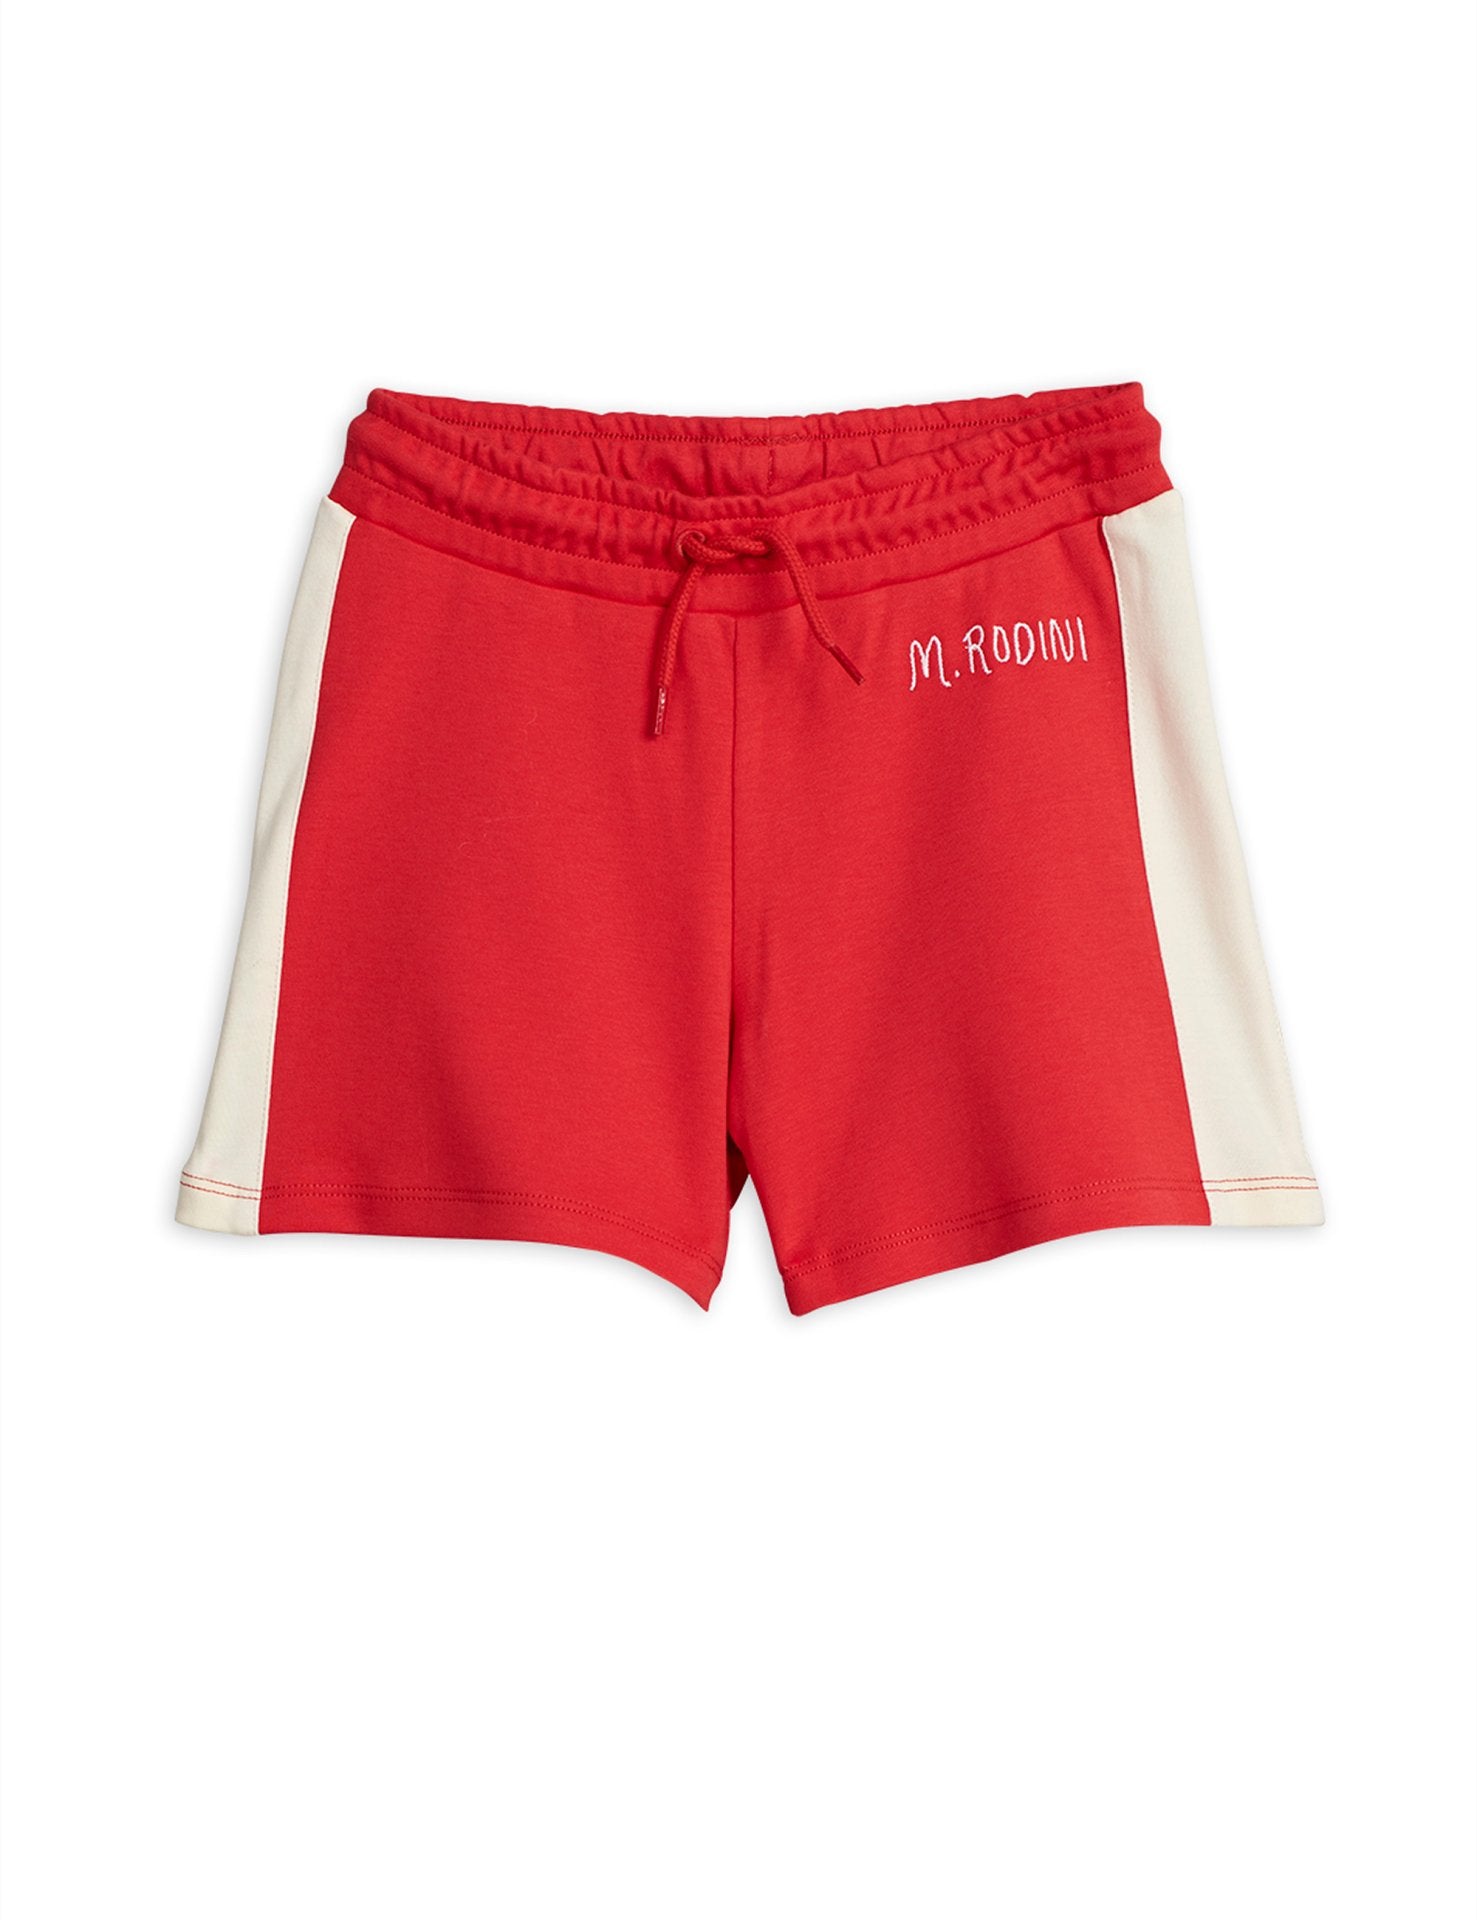 Mini Rodini Rugby Shorts - Red